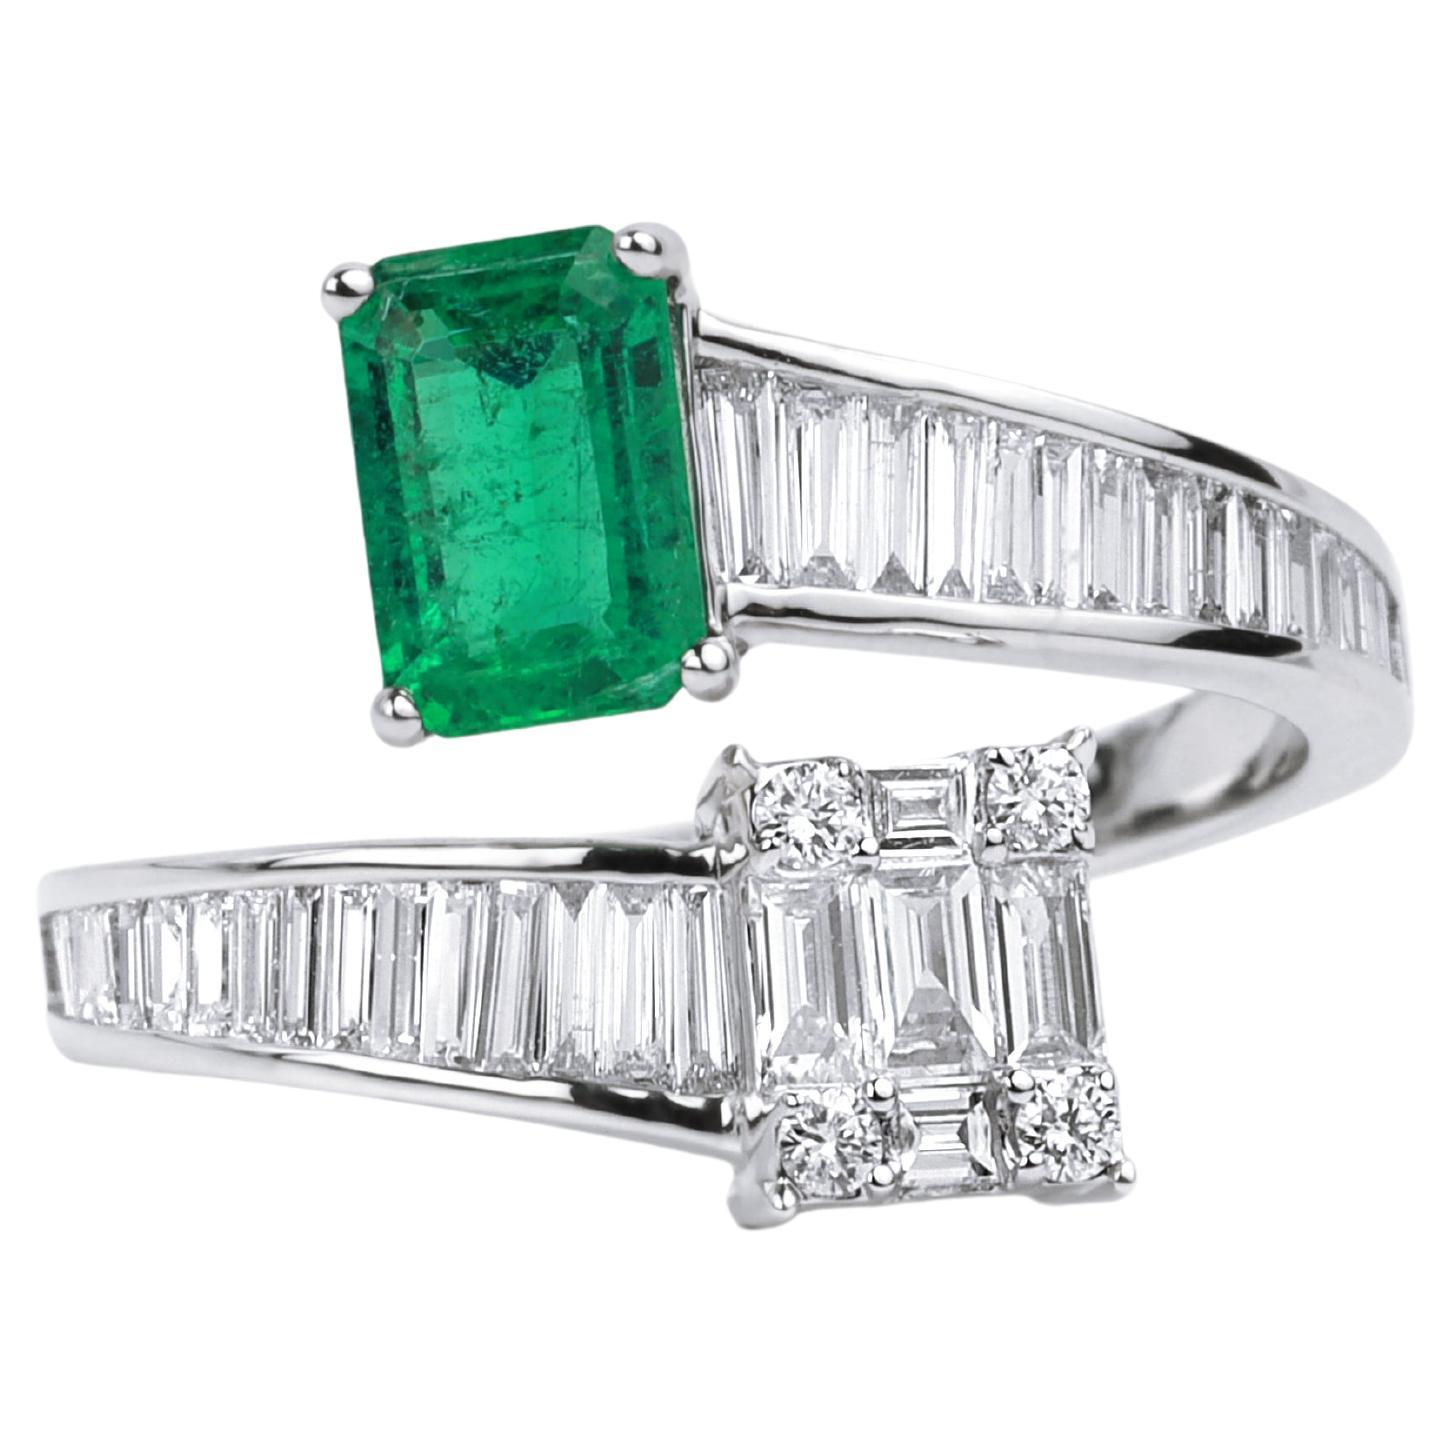 Emerald Cut 2 Carat Emerald Diamond Baguette Cut Cocktail Engagement Ring